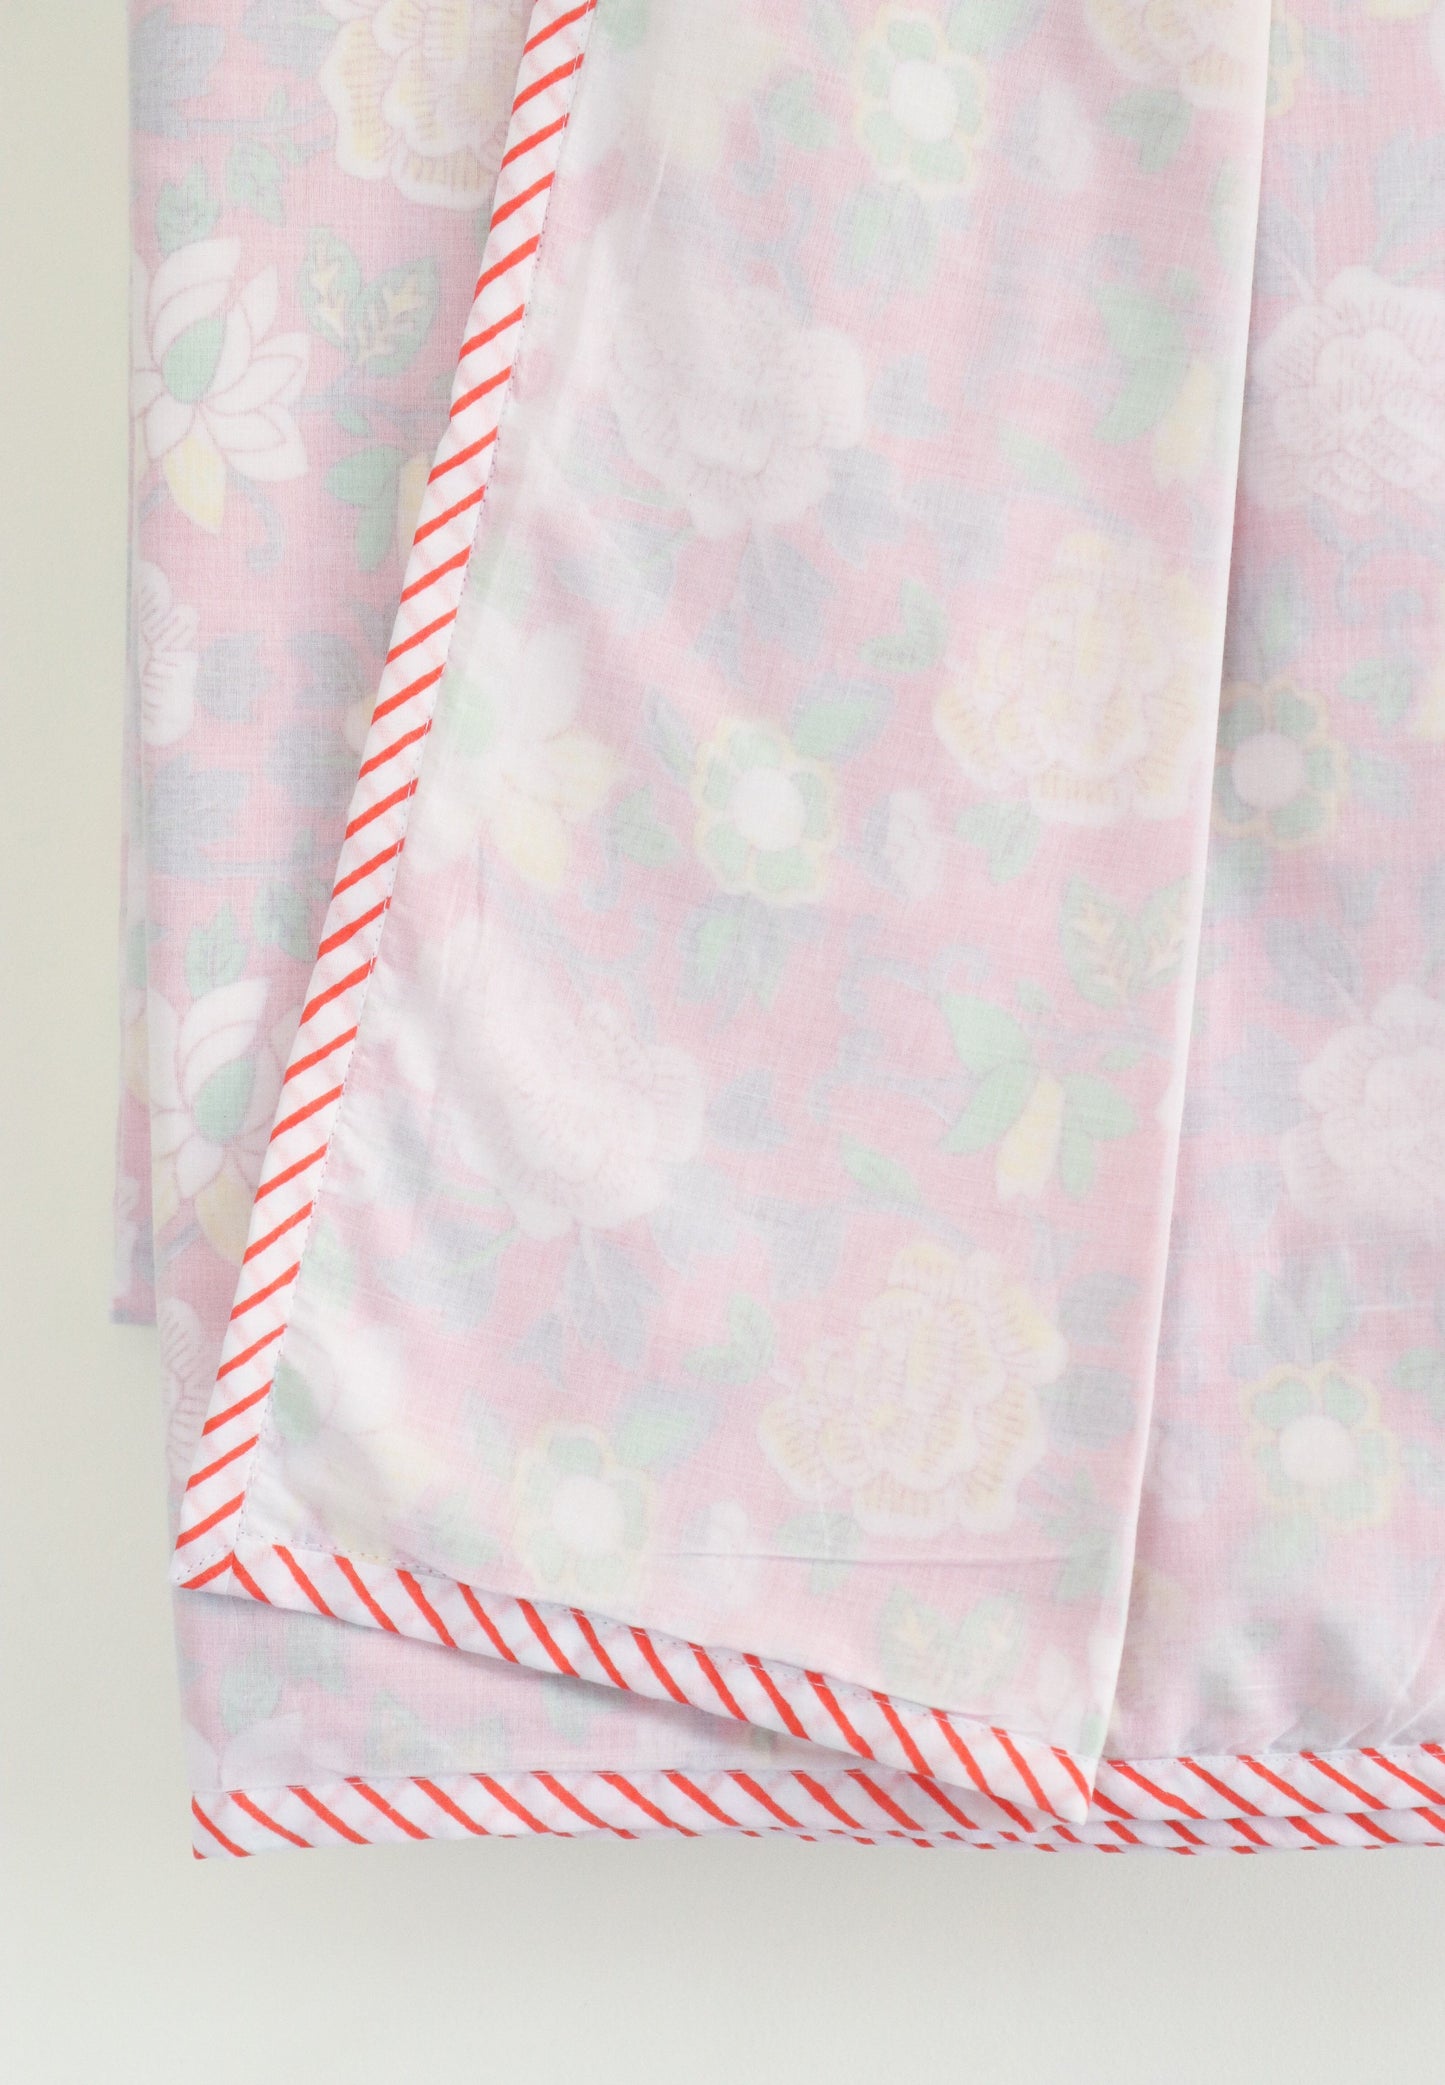 Single size AC Dohar - Block print cotton dohar - 60x90 inches - Mul Dohar blanket - three layers cotton fabric